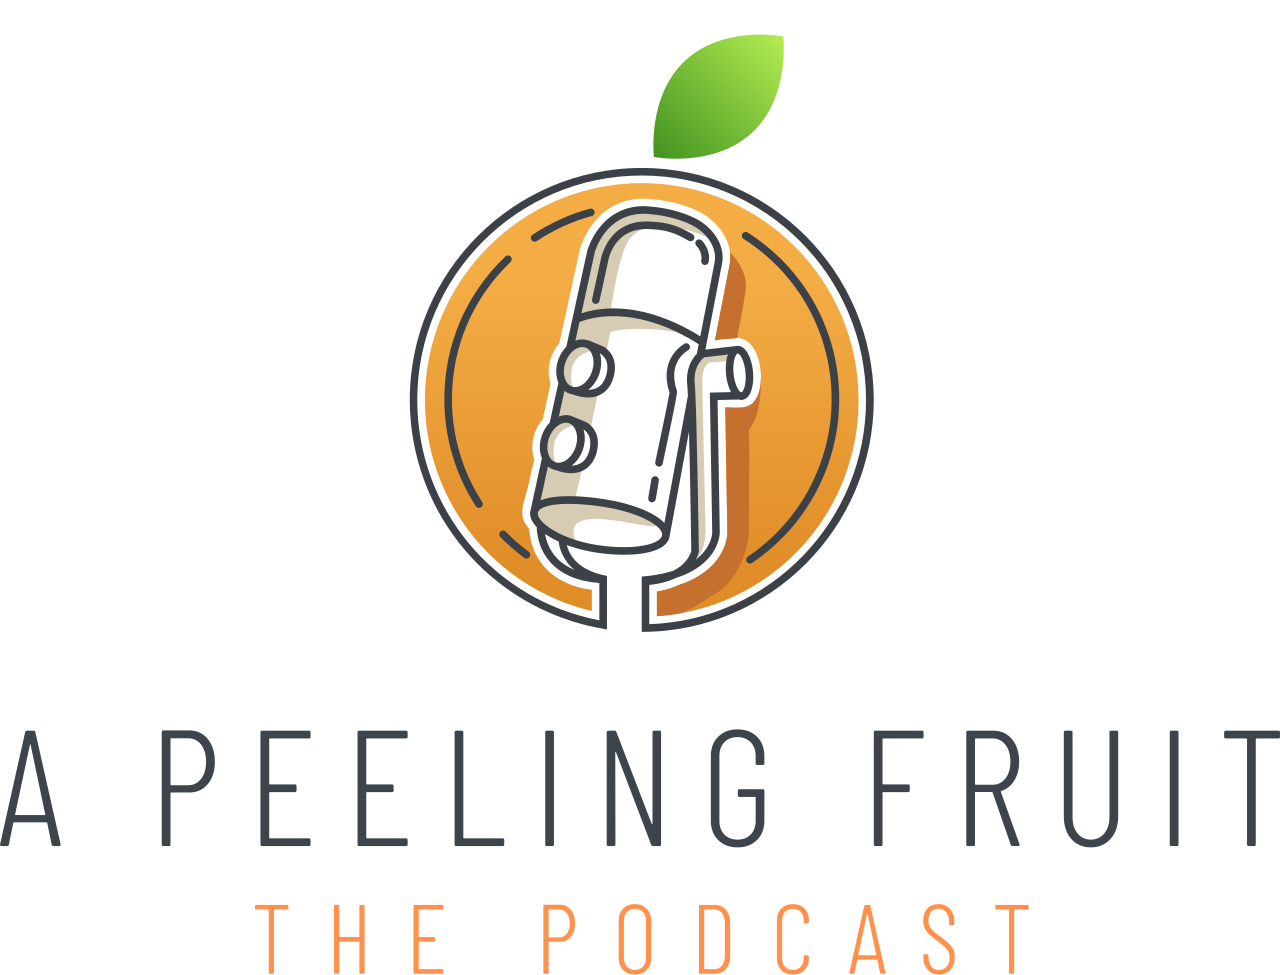 a peeling fruit's logo